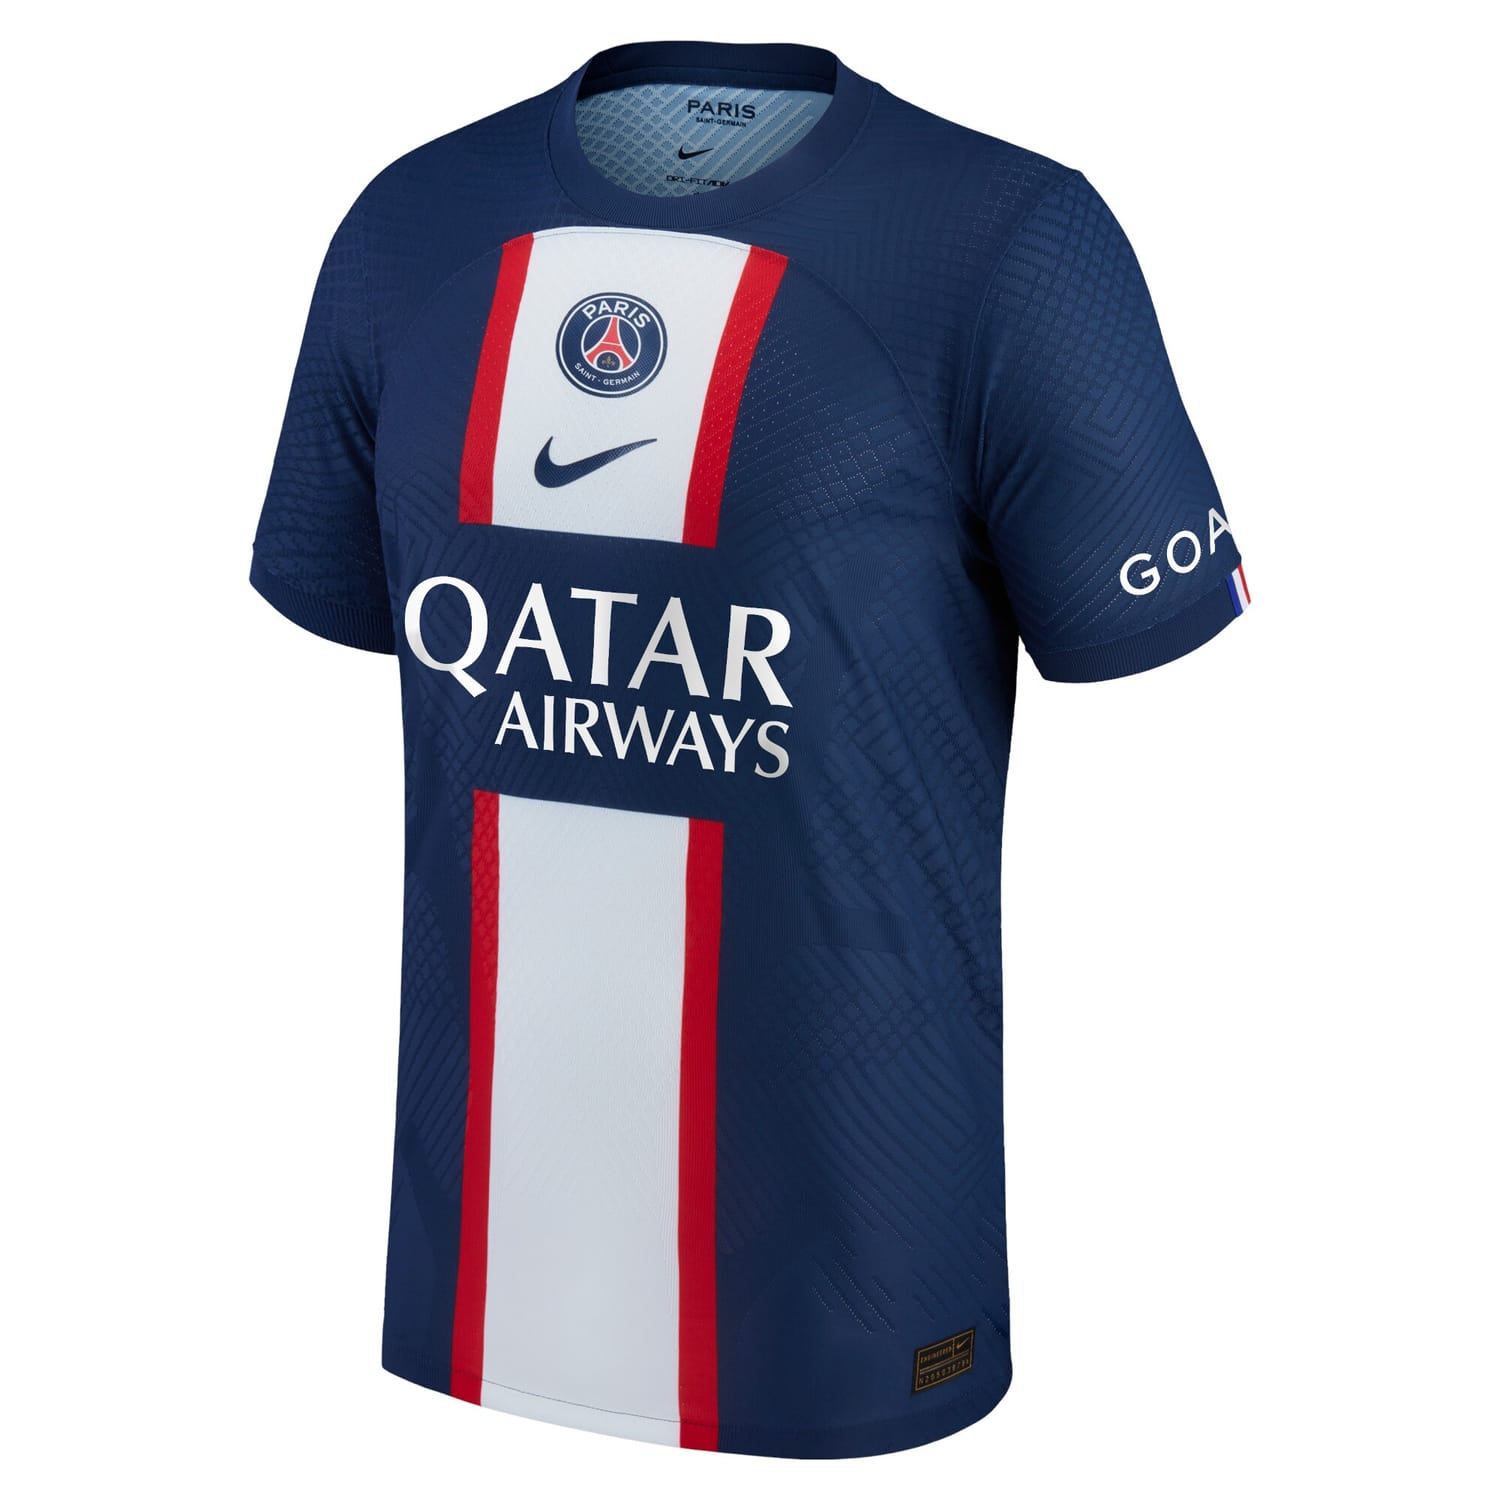 Ligue 1 Paris Saint-Germain Home Authentic Jersey Shirt 2022-23 player Vitinha 17 printing for Men